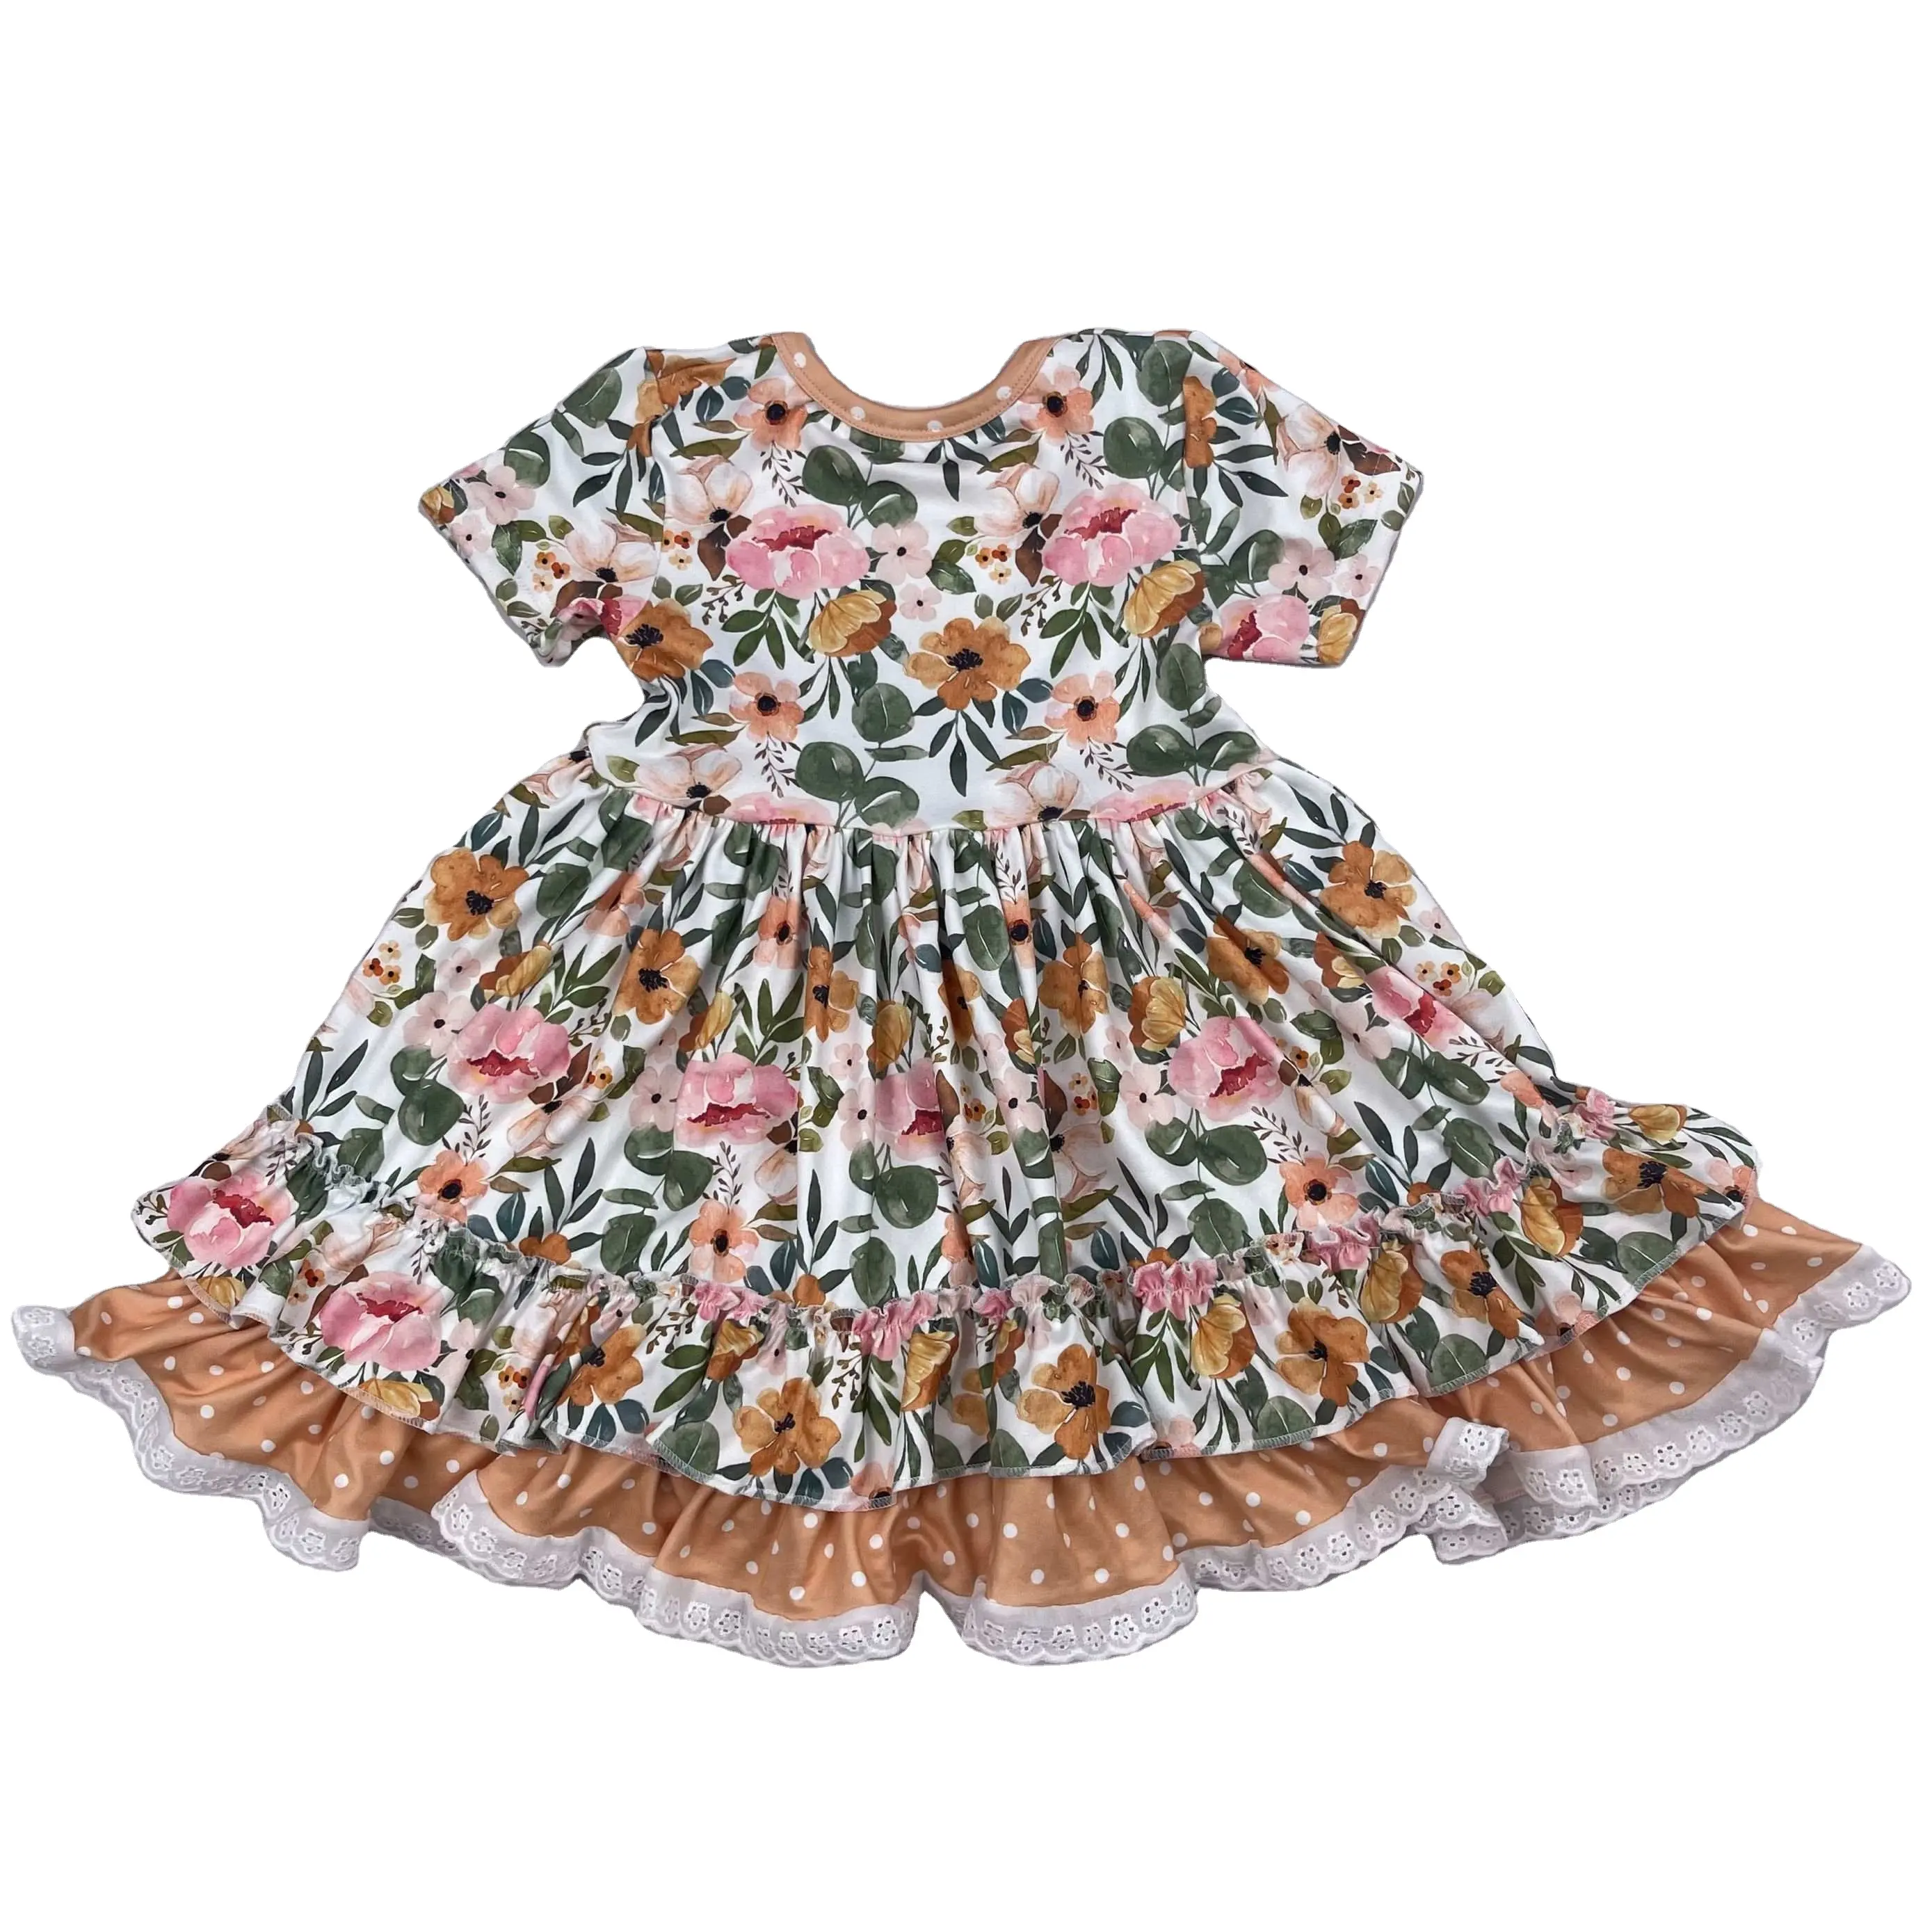 Baby girls Floral Spring Ruffle Flower Polka dot Print smock Party Dress Custom kids girls boutique twirl dresses 2-12